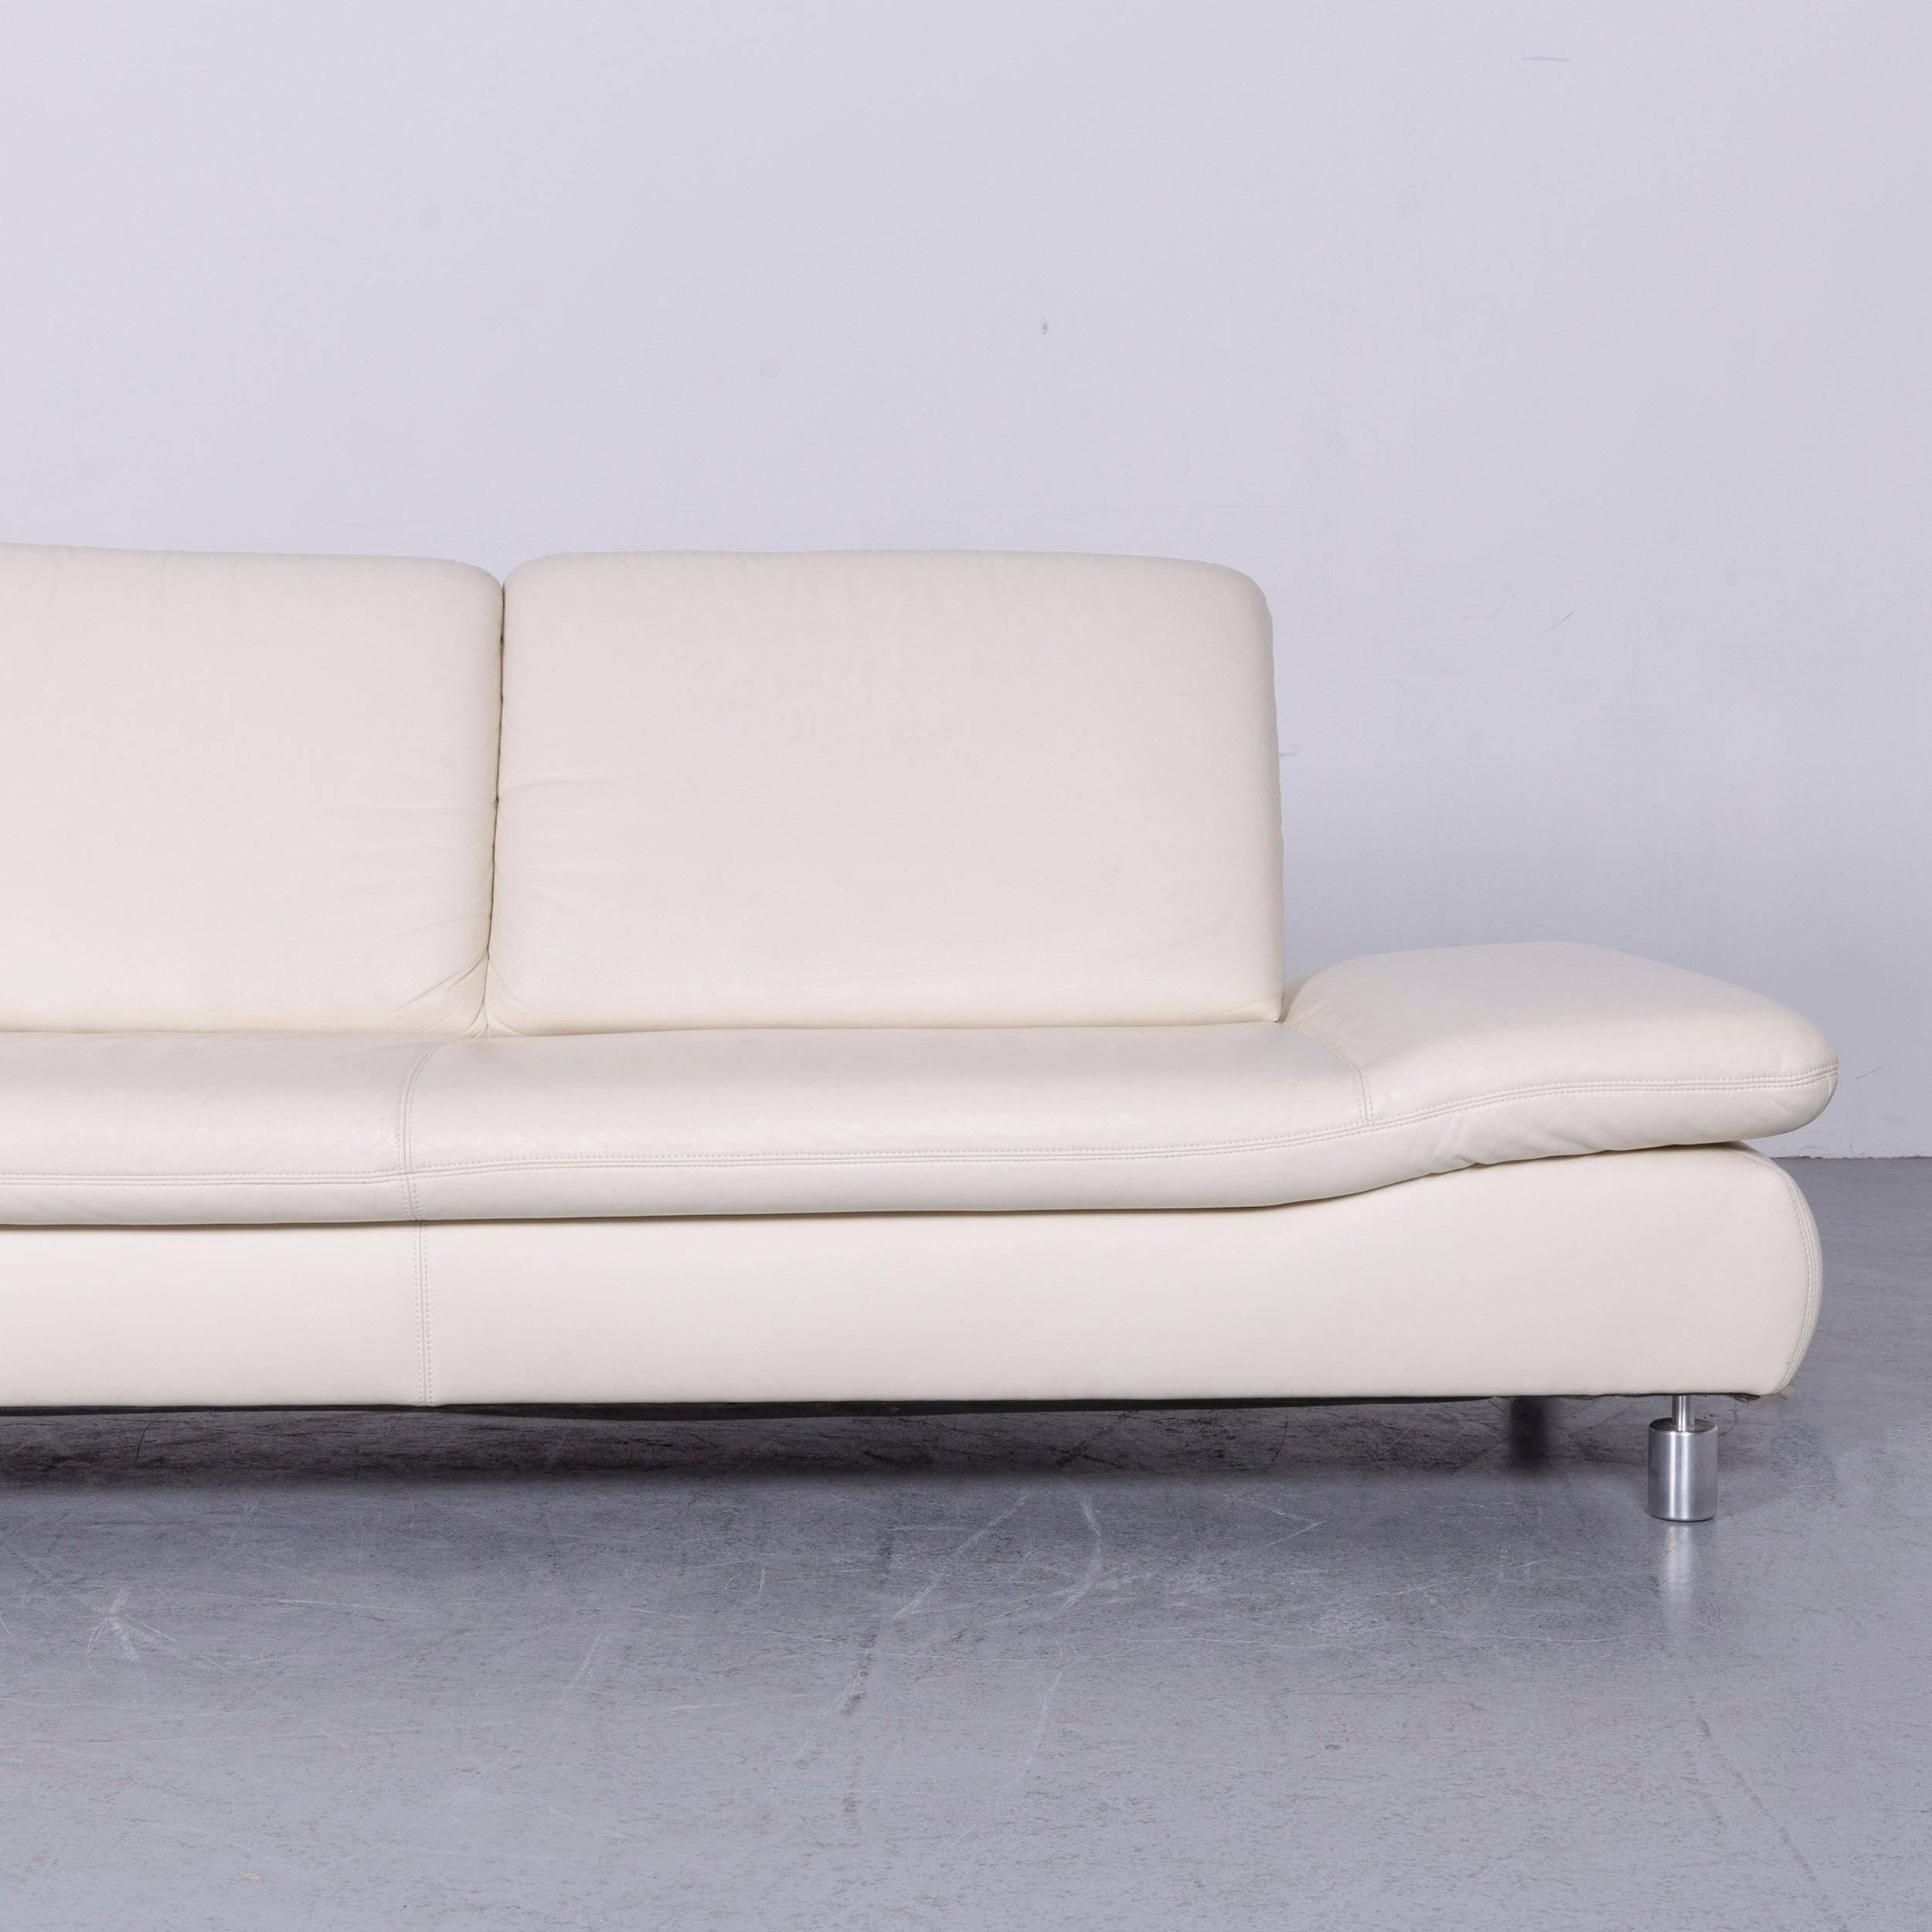 Koinor Rivoli Designer Leather Three-Seat Sofa in White with Functions 1